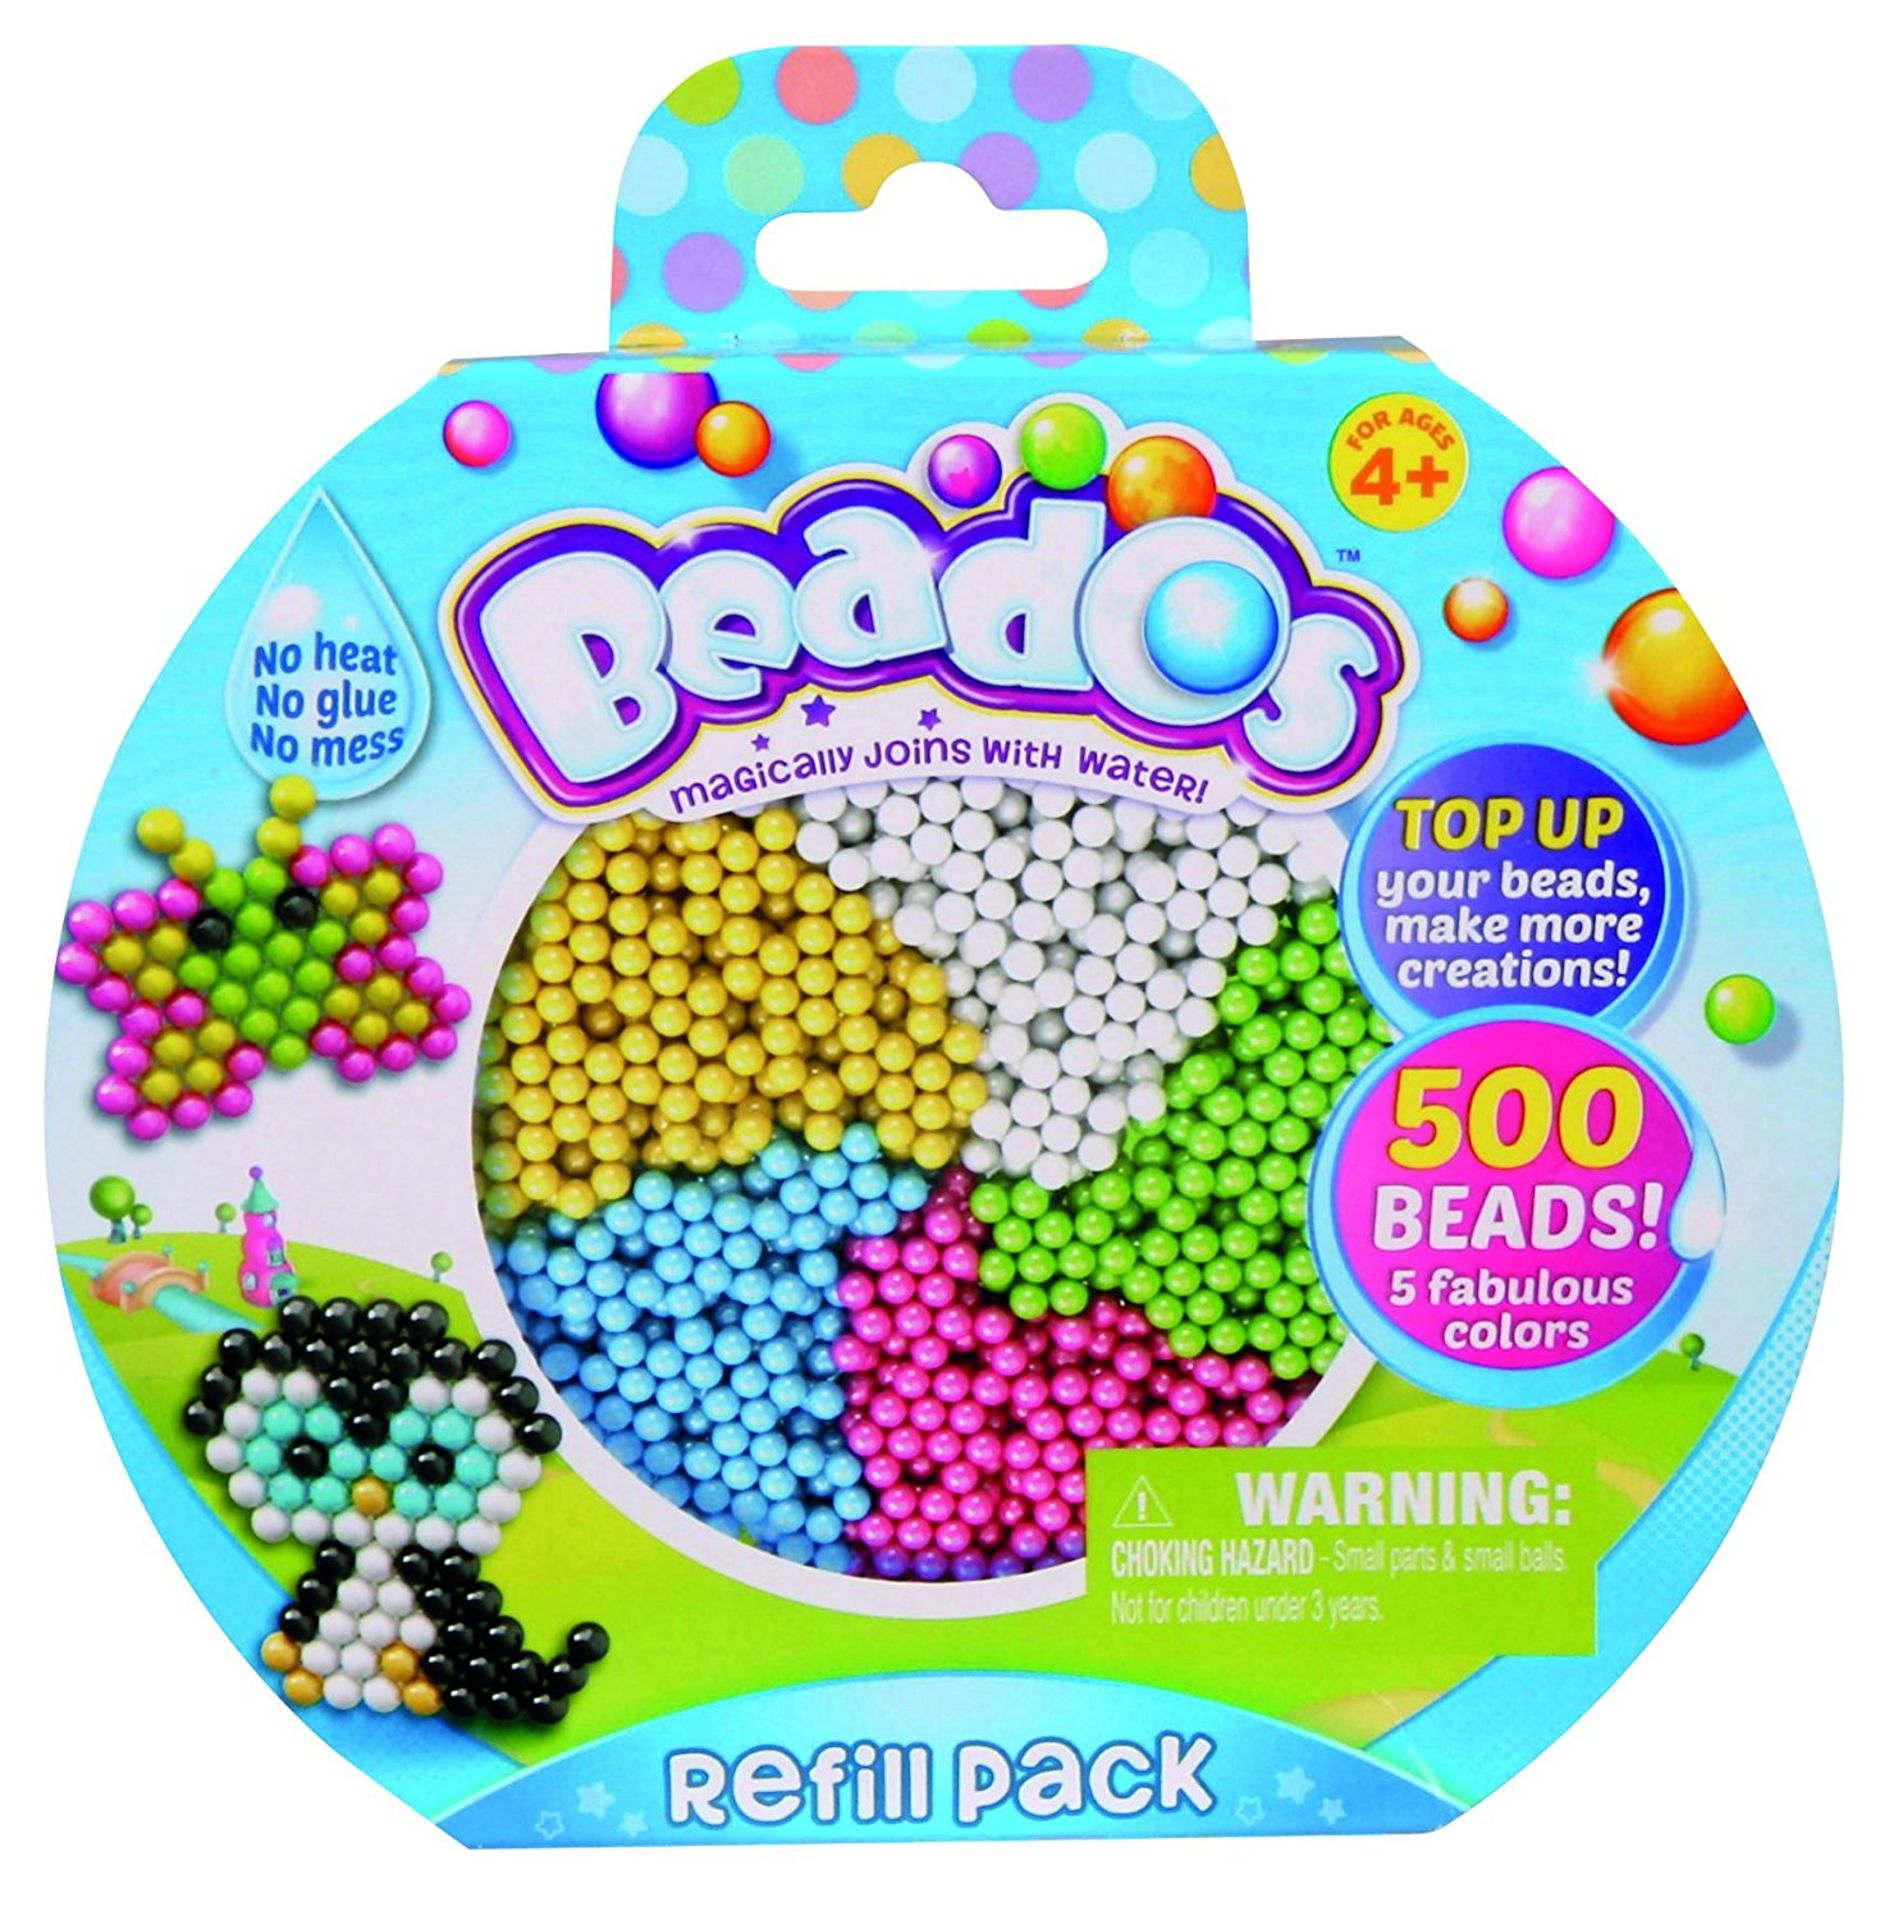 160 x Beados 500 Beads Refill Pack | 630996106327 | RRP £ 1598.40